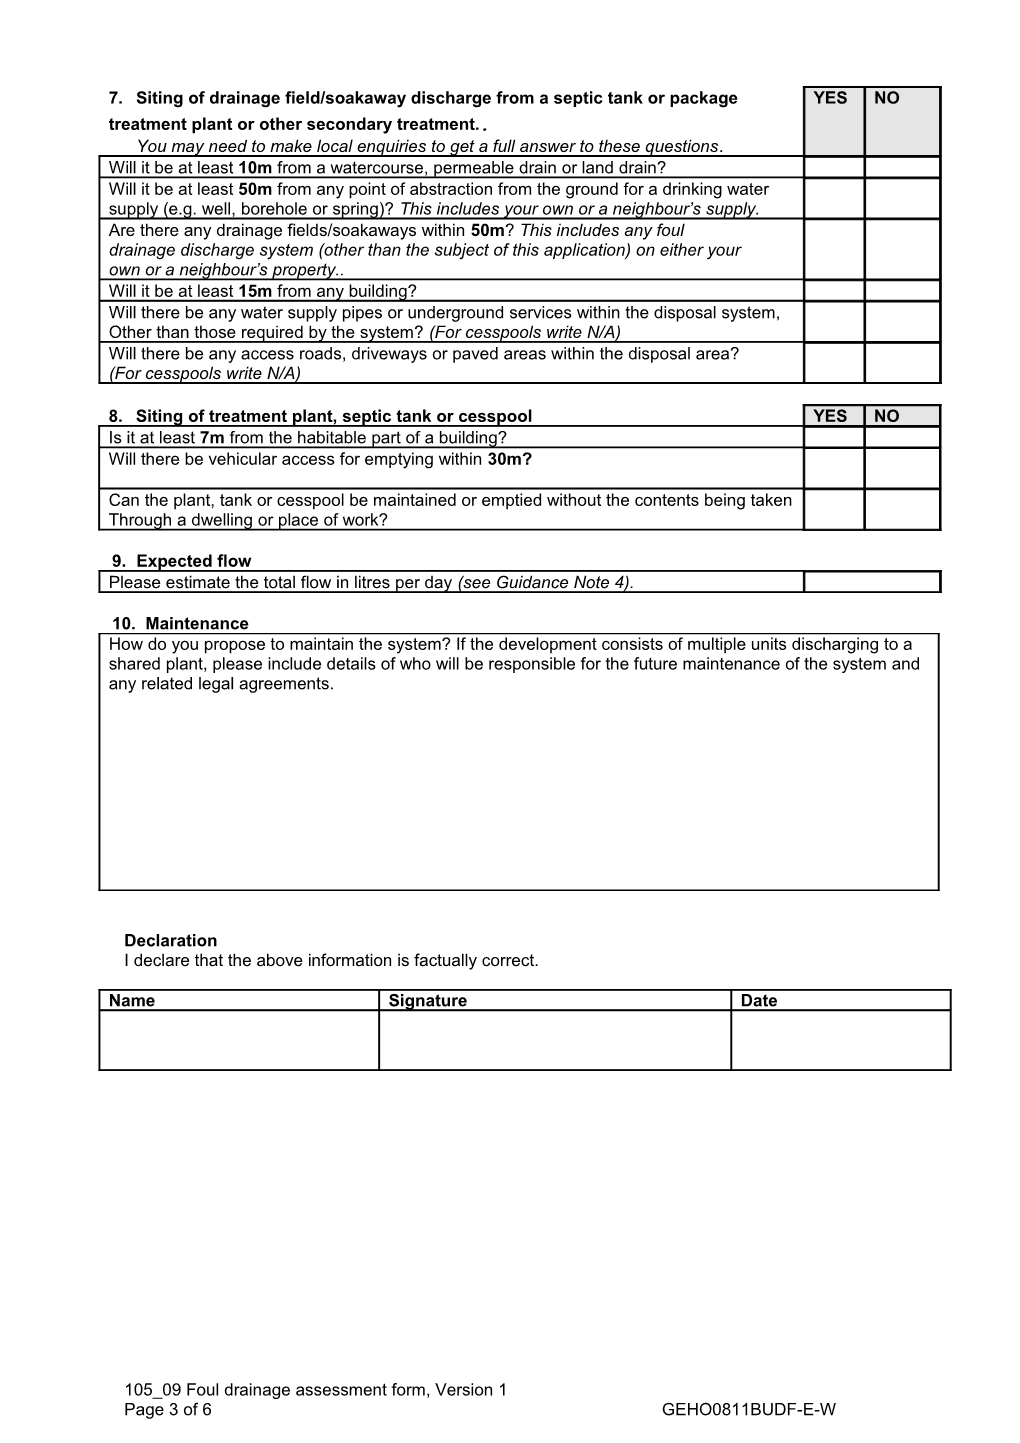 105 09 Foul Drainage Assessment Form (FDA1)